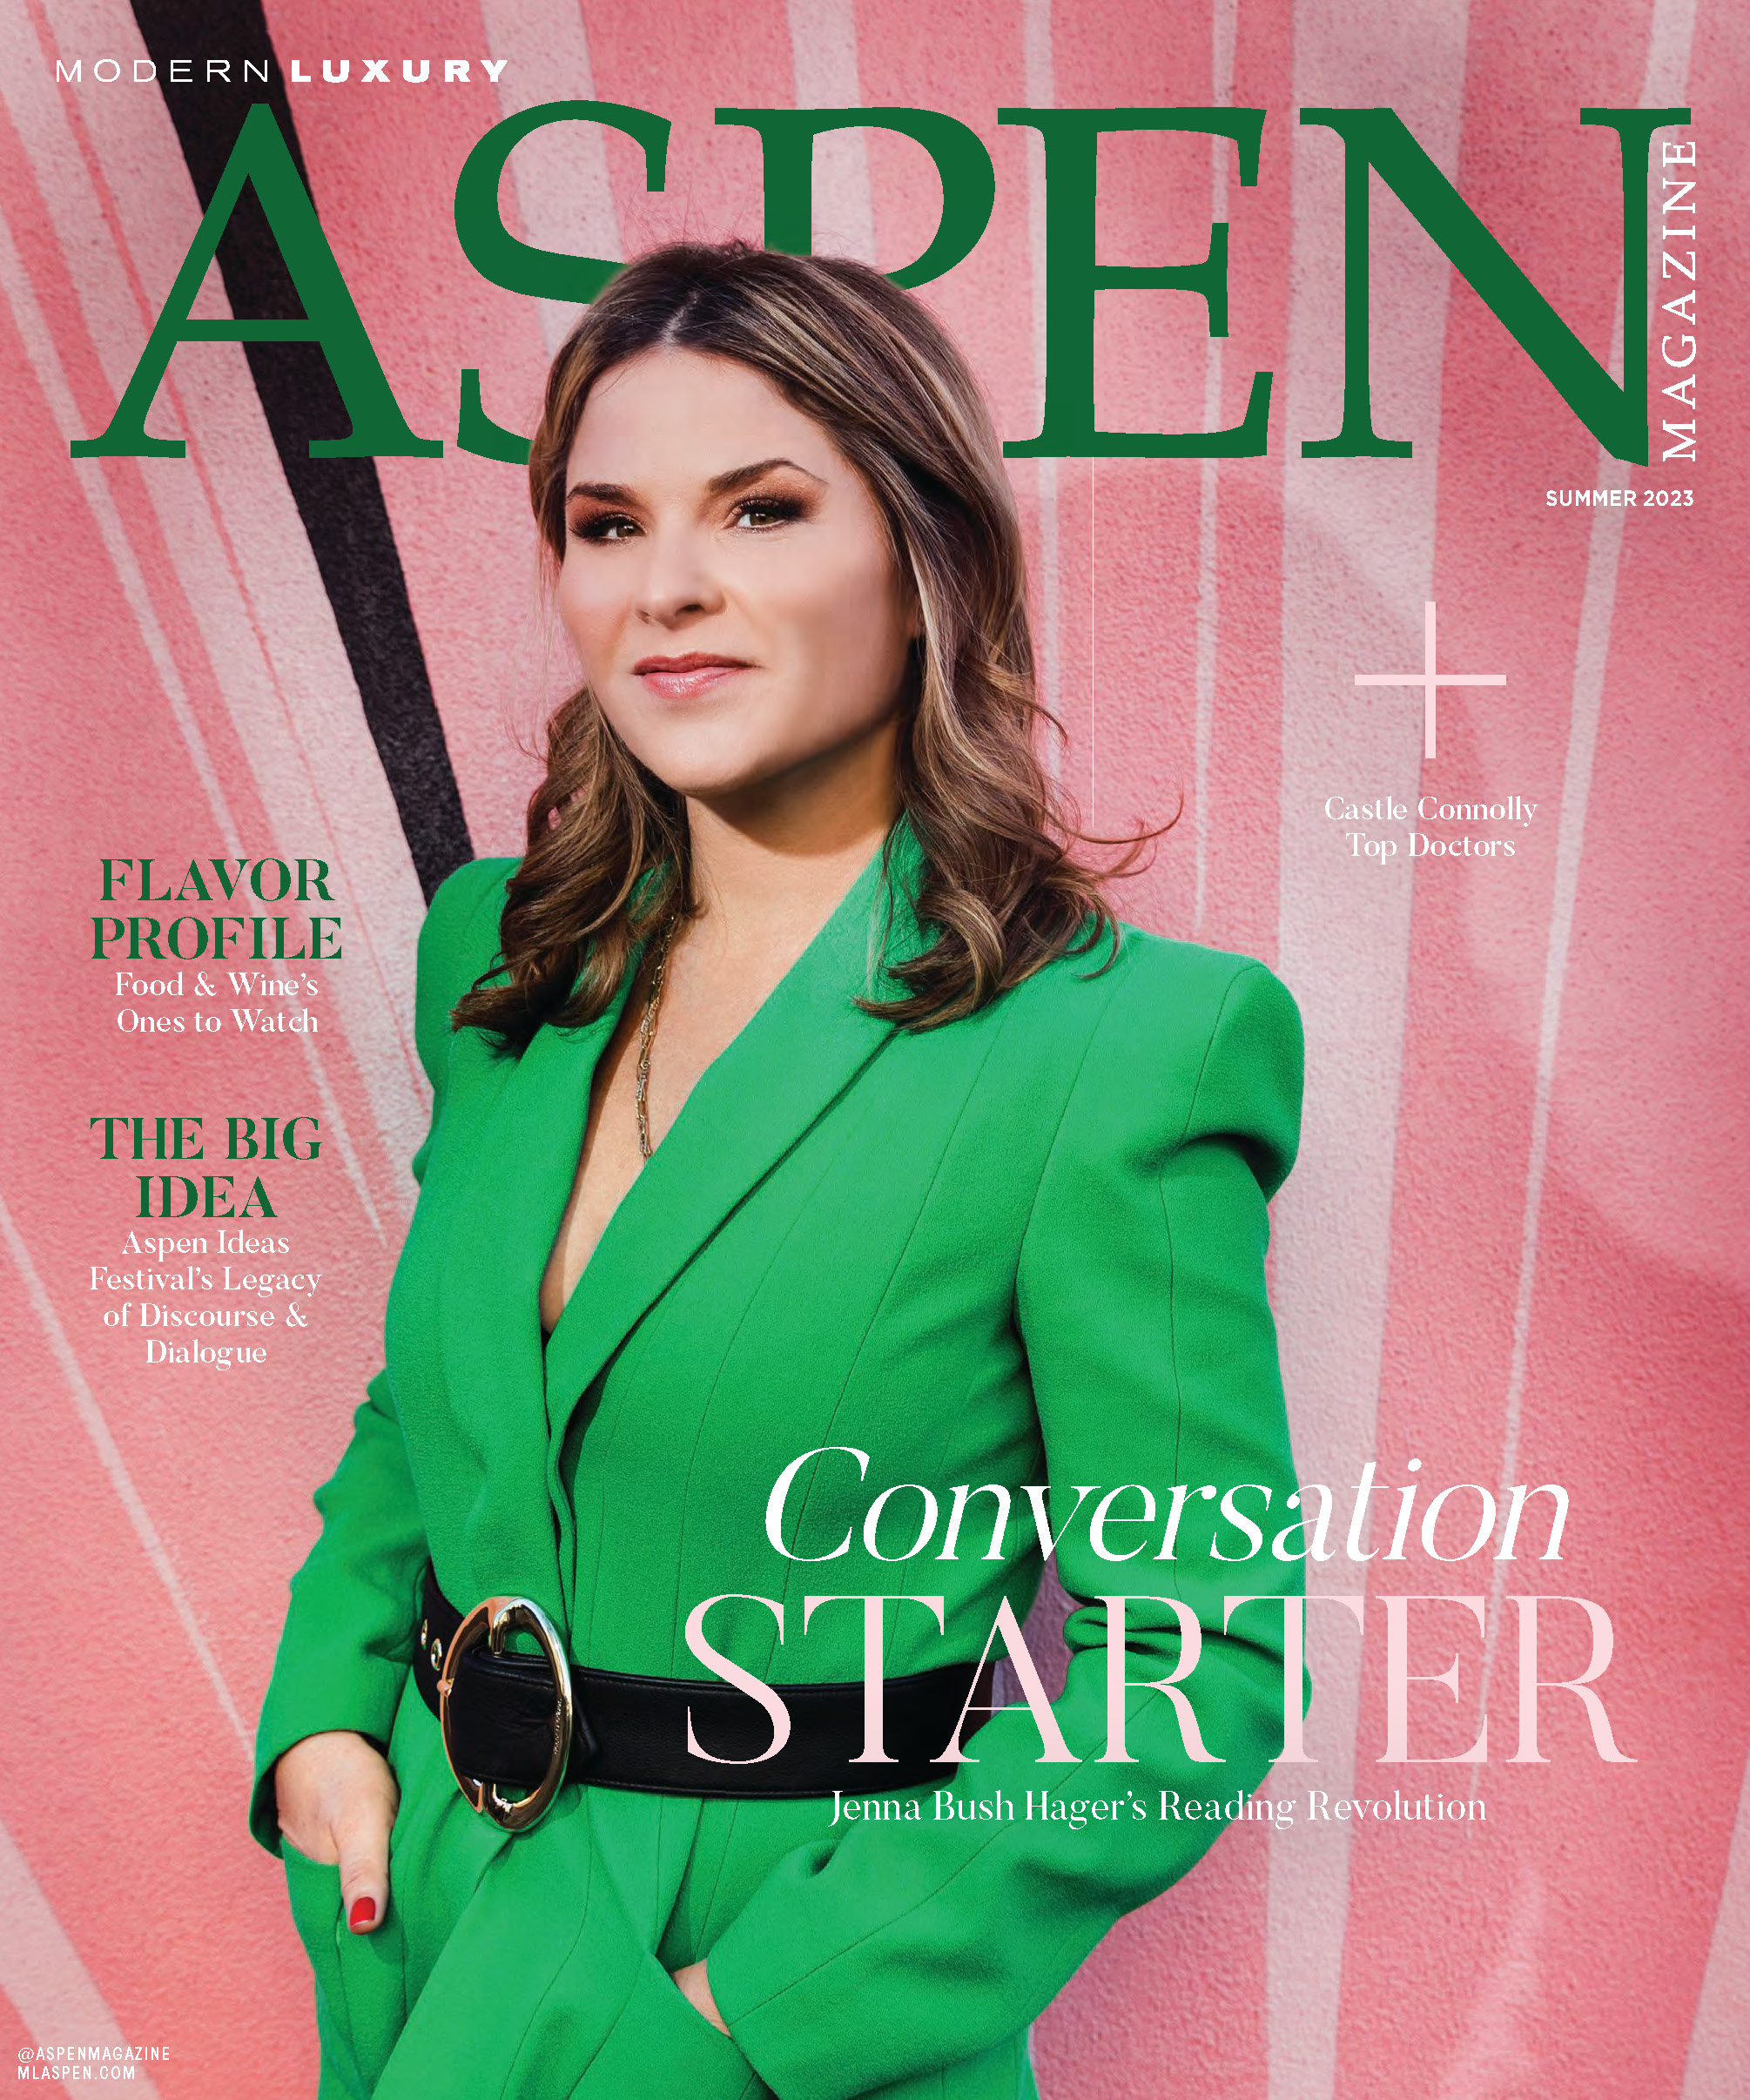 Modern-Luxury-Aspen Magazine-Summer-Issue-2023-Jenna-Bush-Hager-Cover